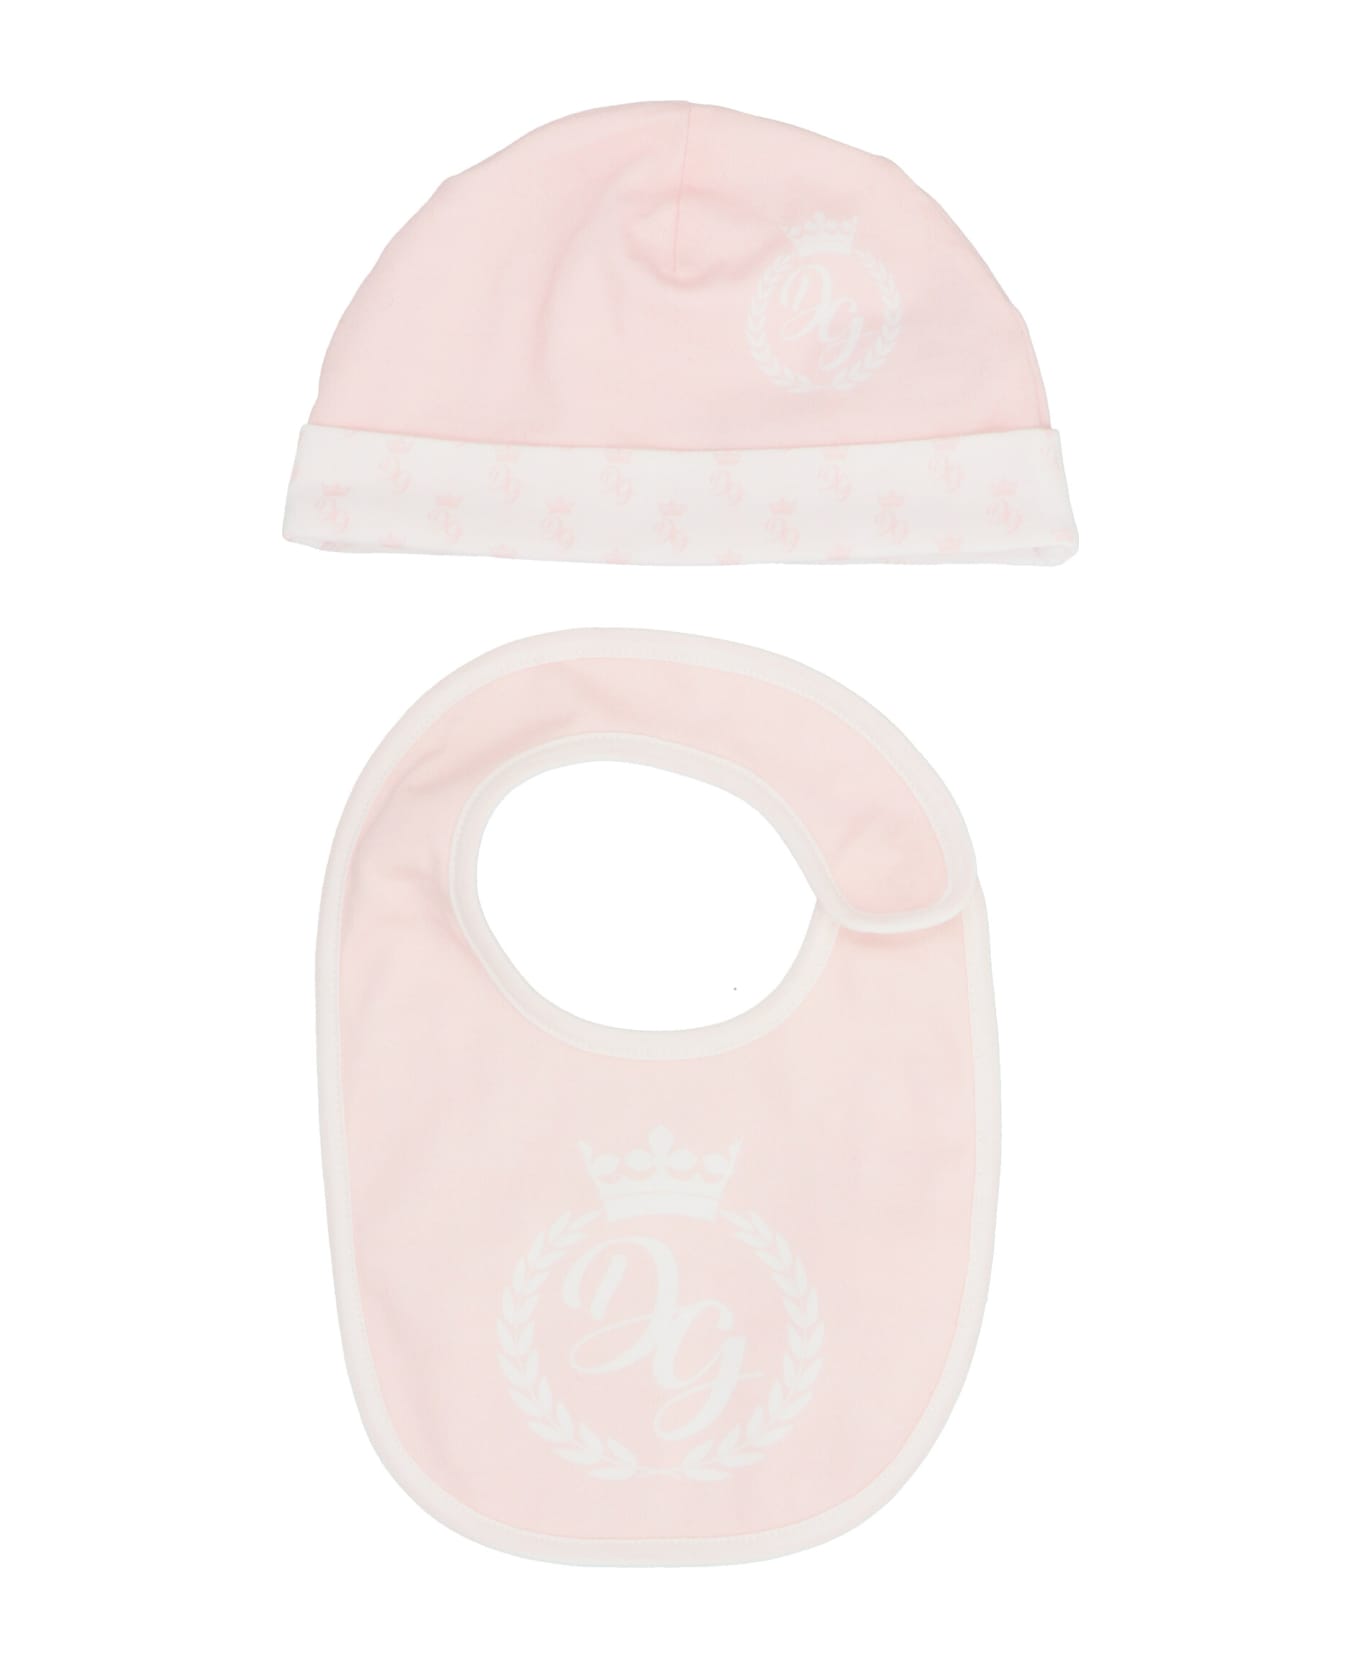 Dolce & Gabbana Sleepsuit + Bib + Beanie Baby Set - Pink